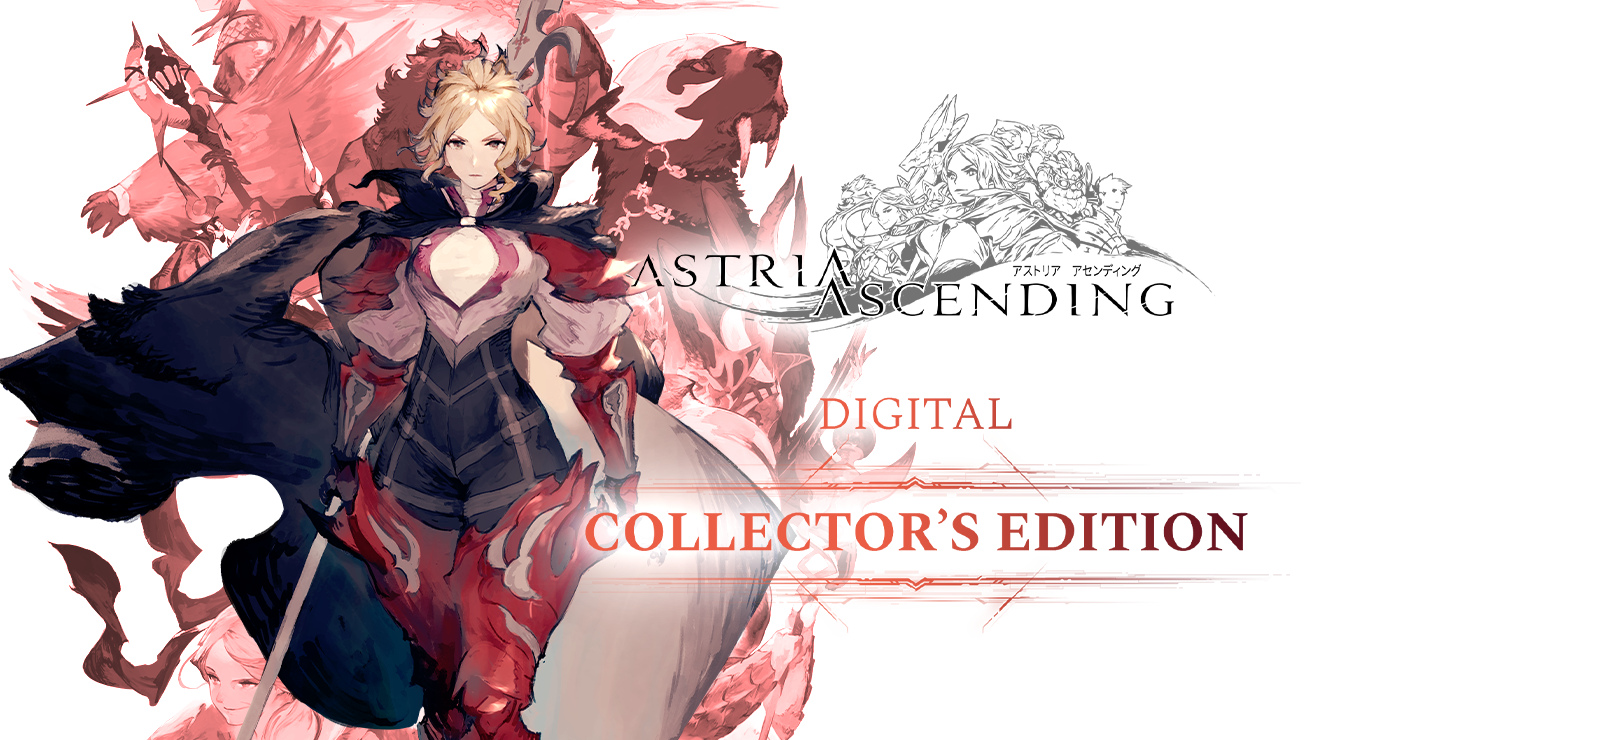 Astria Ascending - Digital Collector's Edition